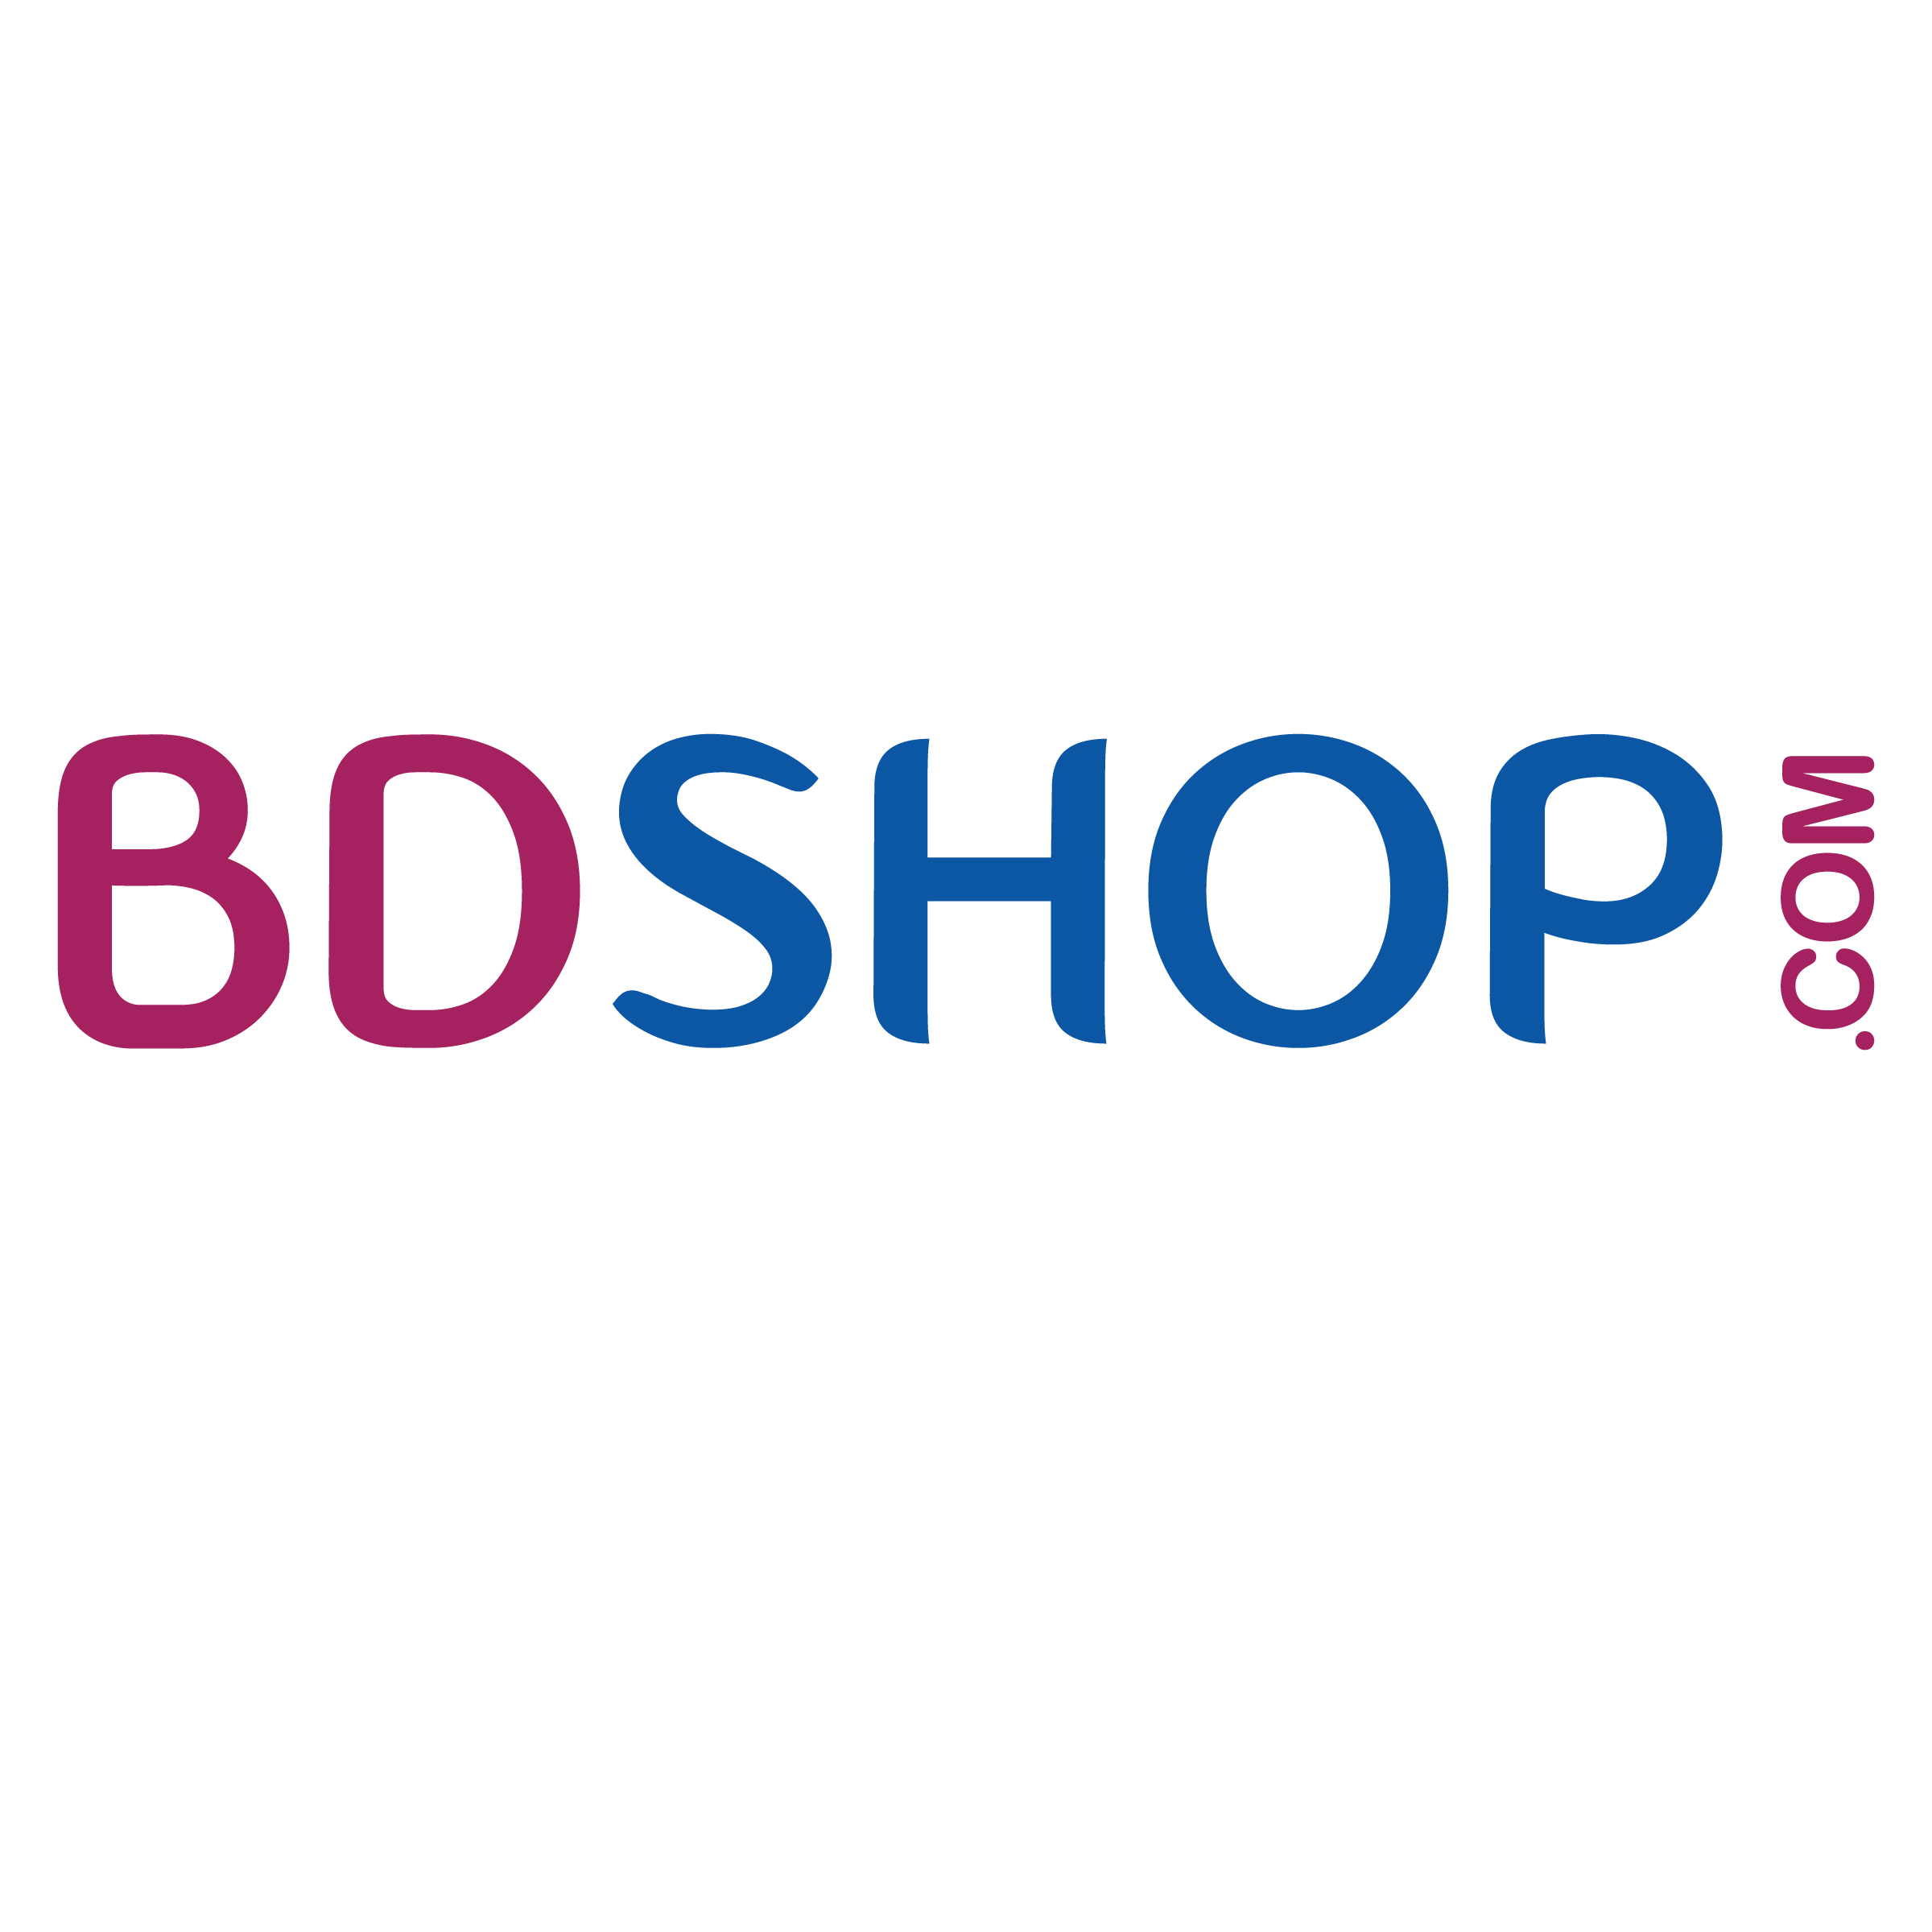 Bdshop Logo photo - 1